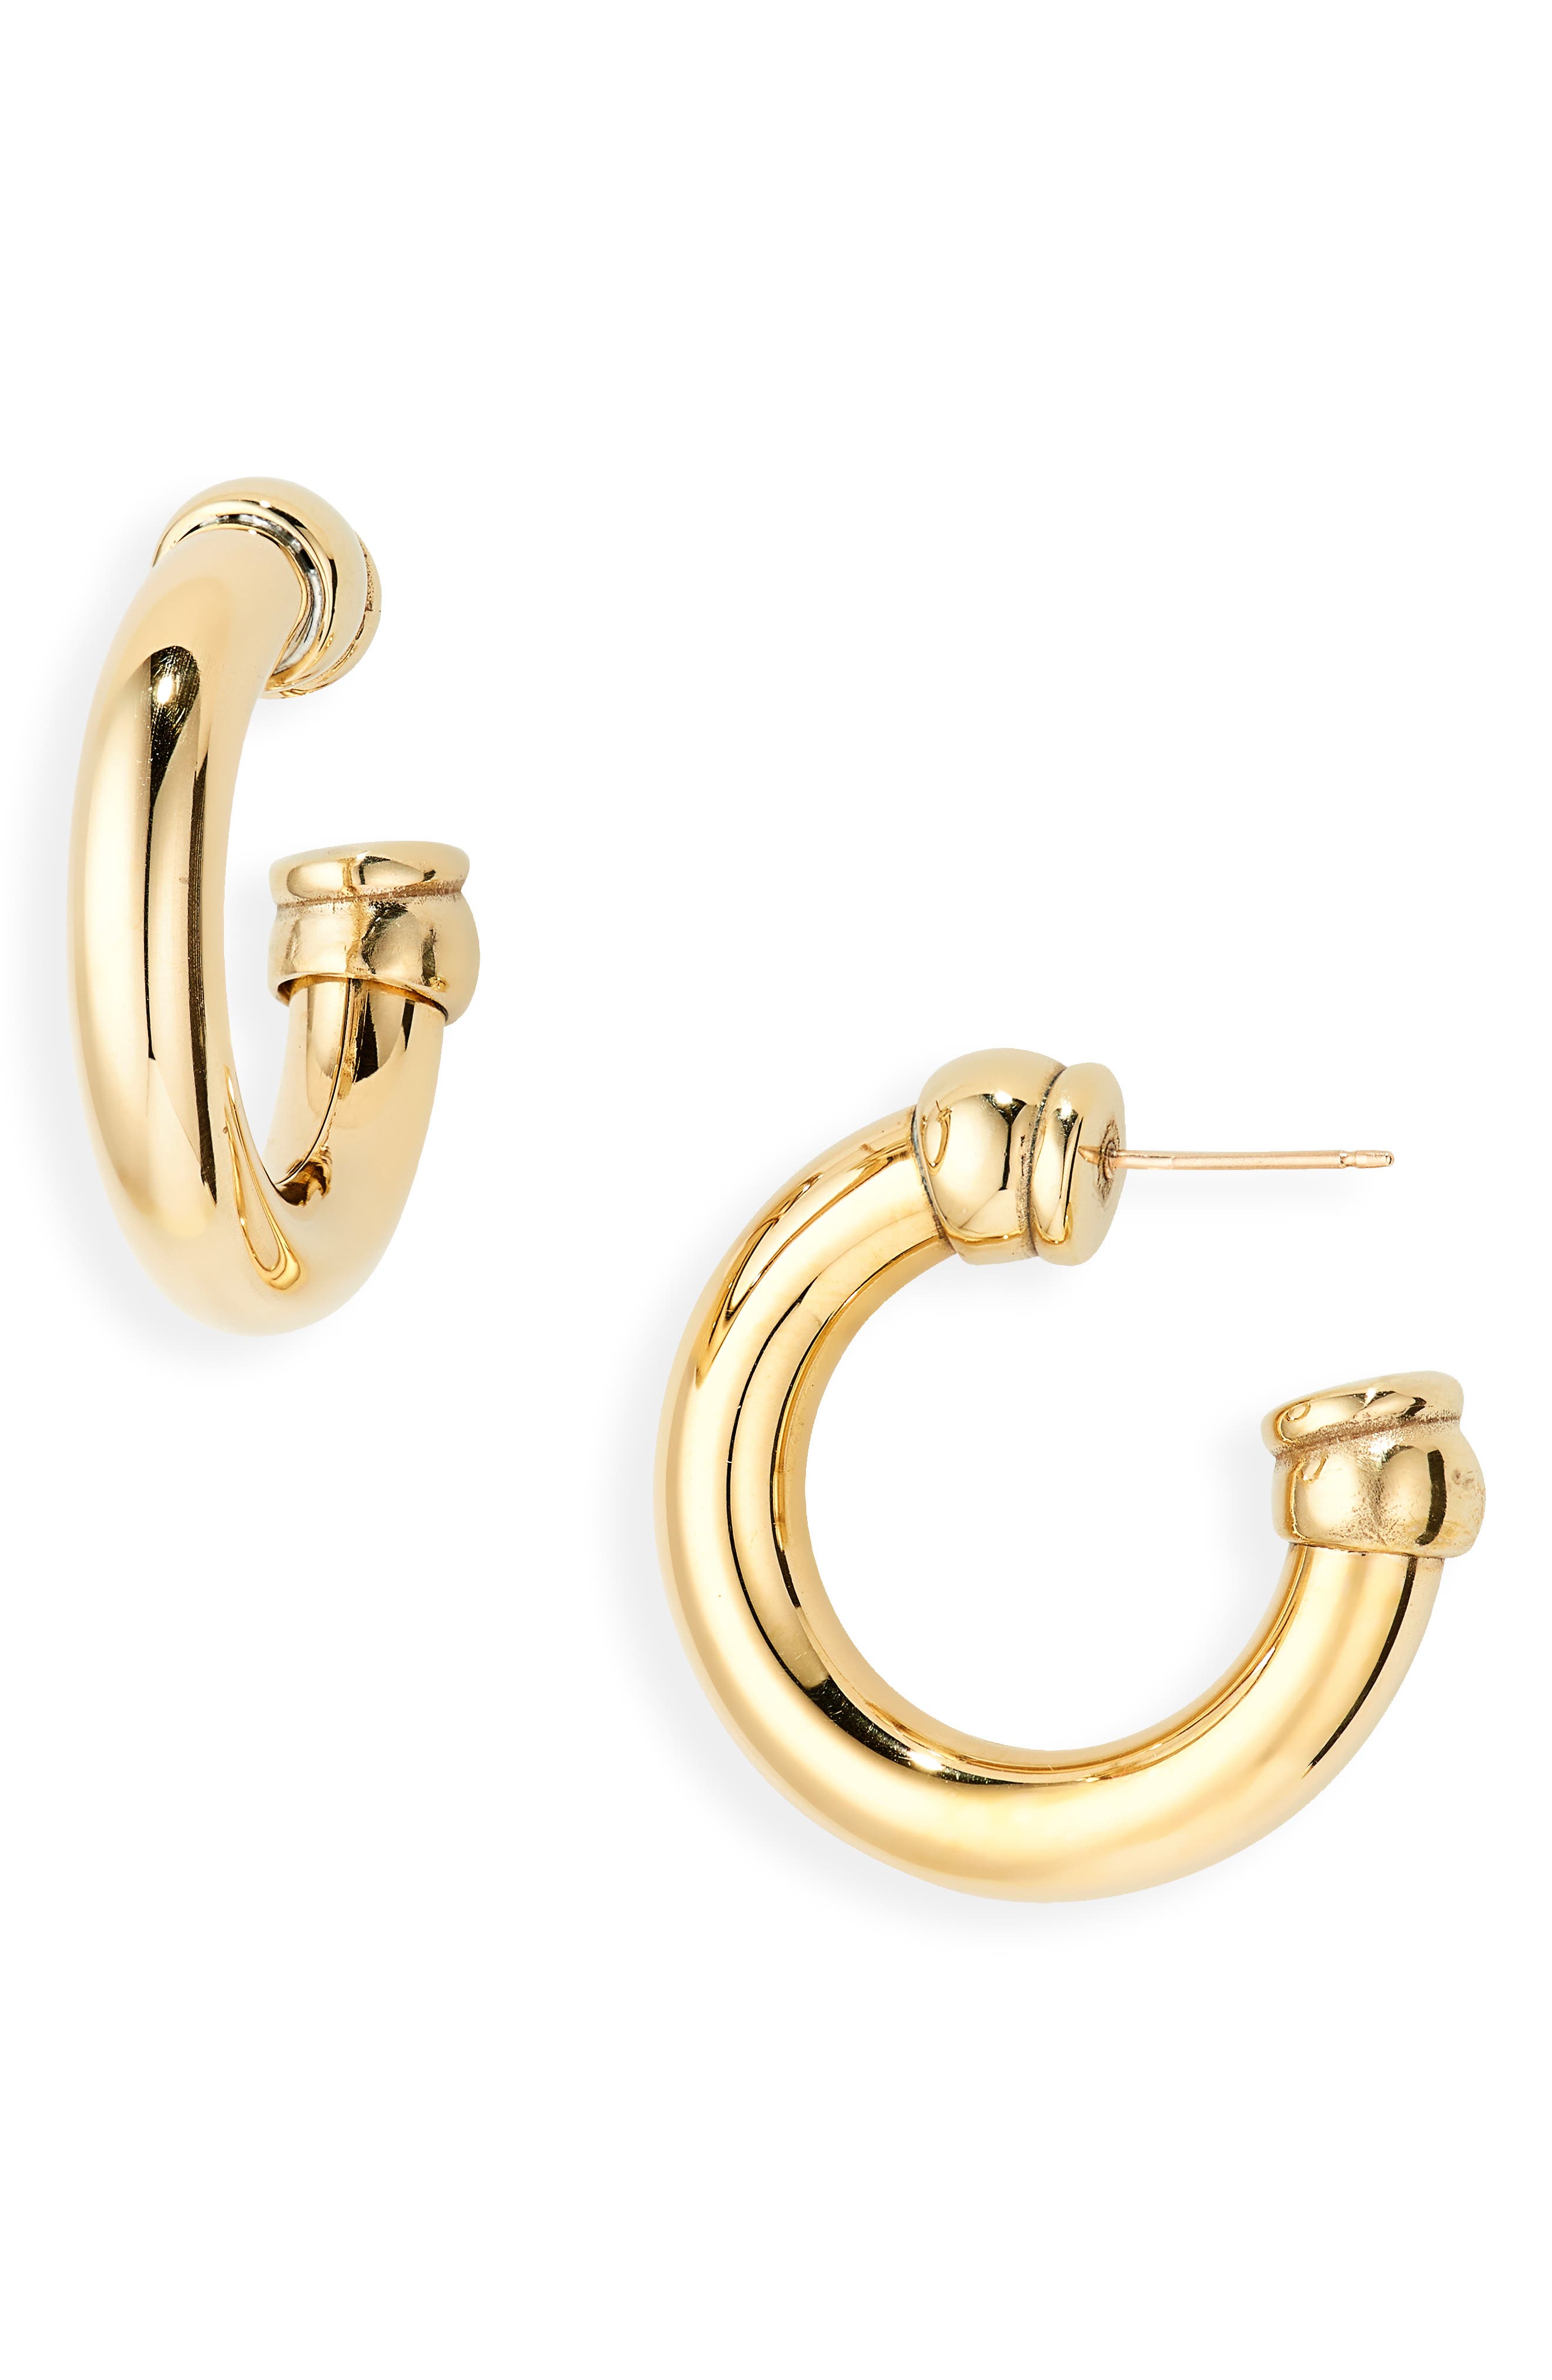 Laura Lombardi Icona Hoop Earrings in Brass at Nordstrom